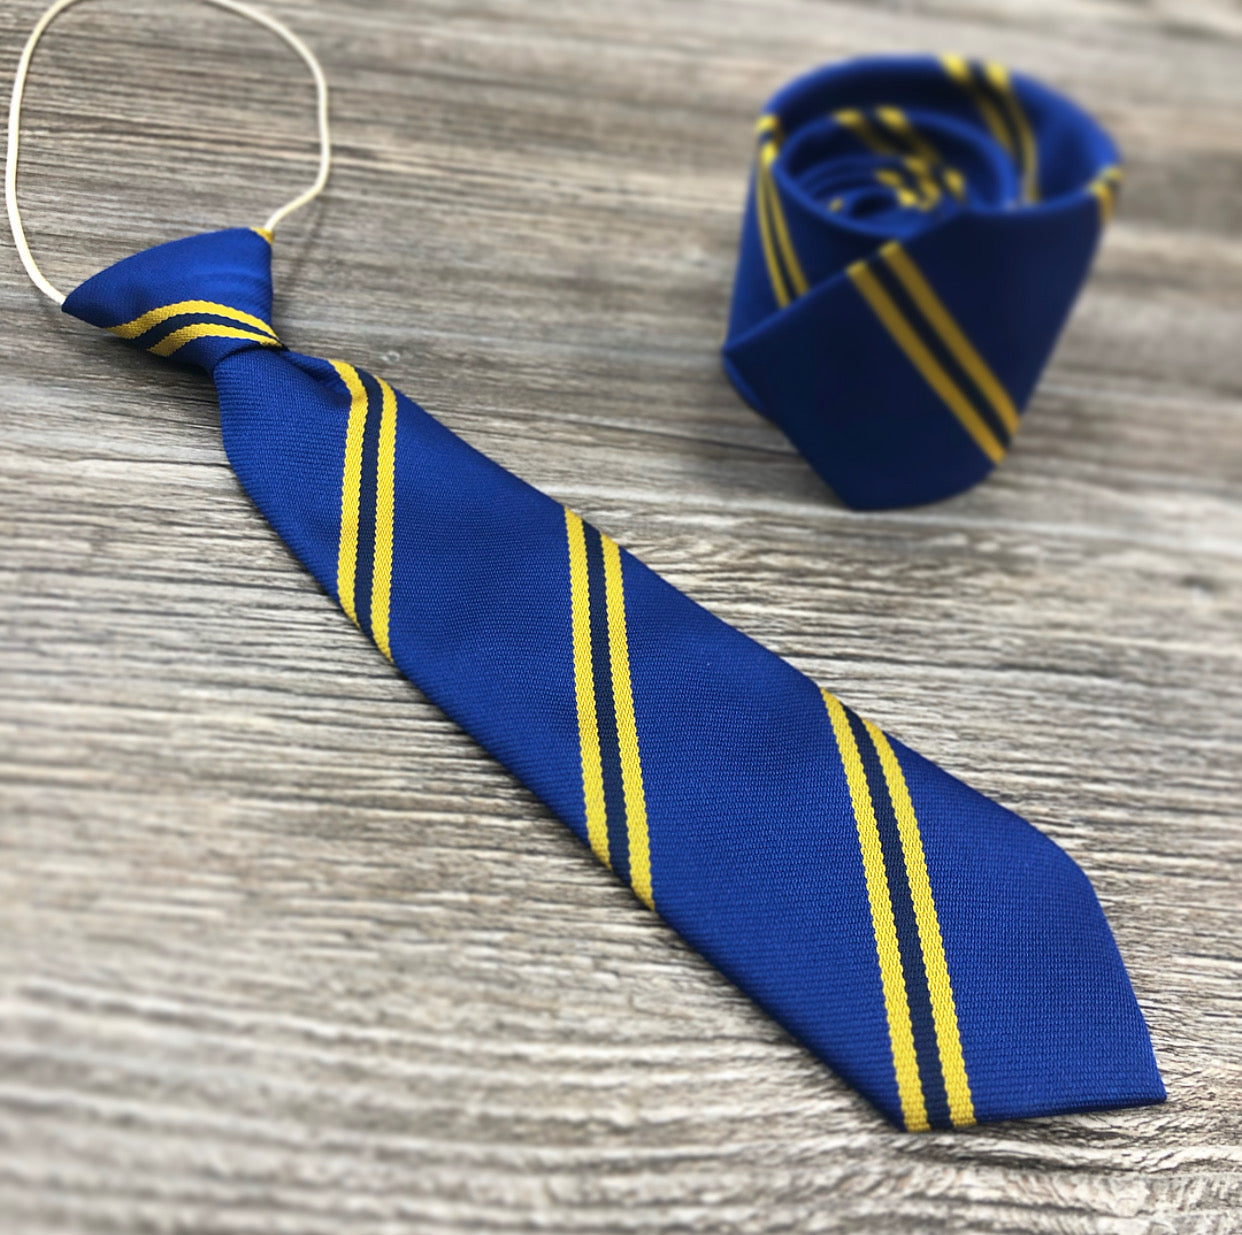 Brookside Primary School Tie. Elastic and clip on tie.